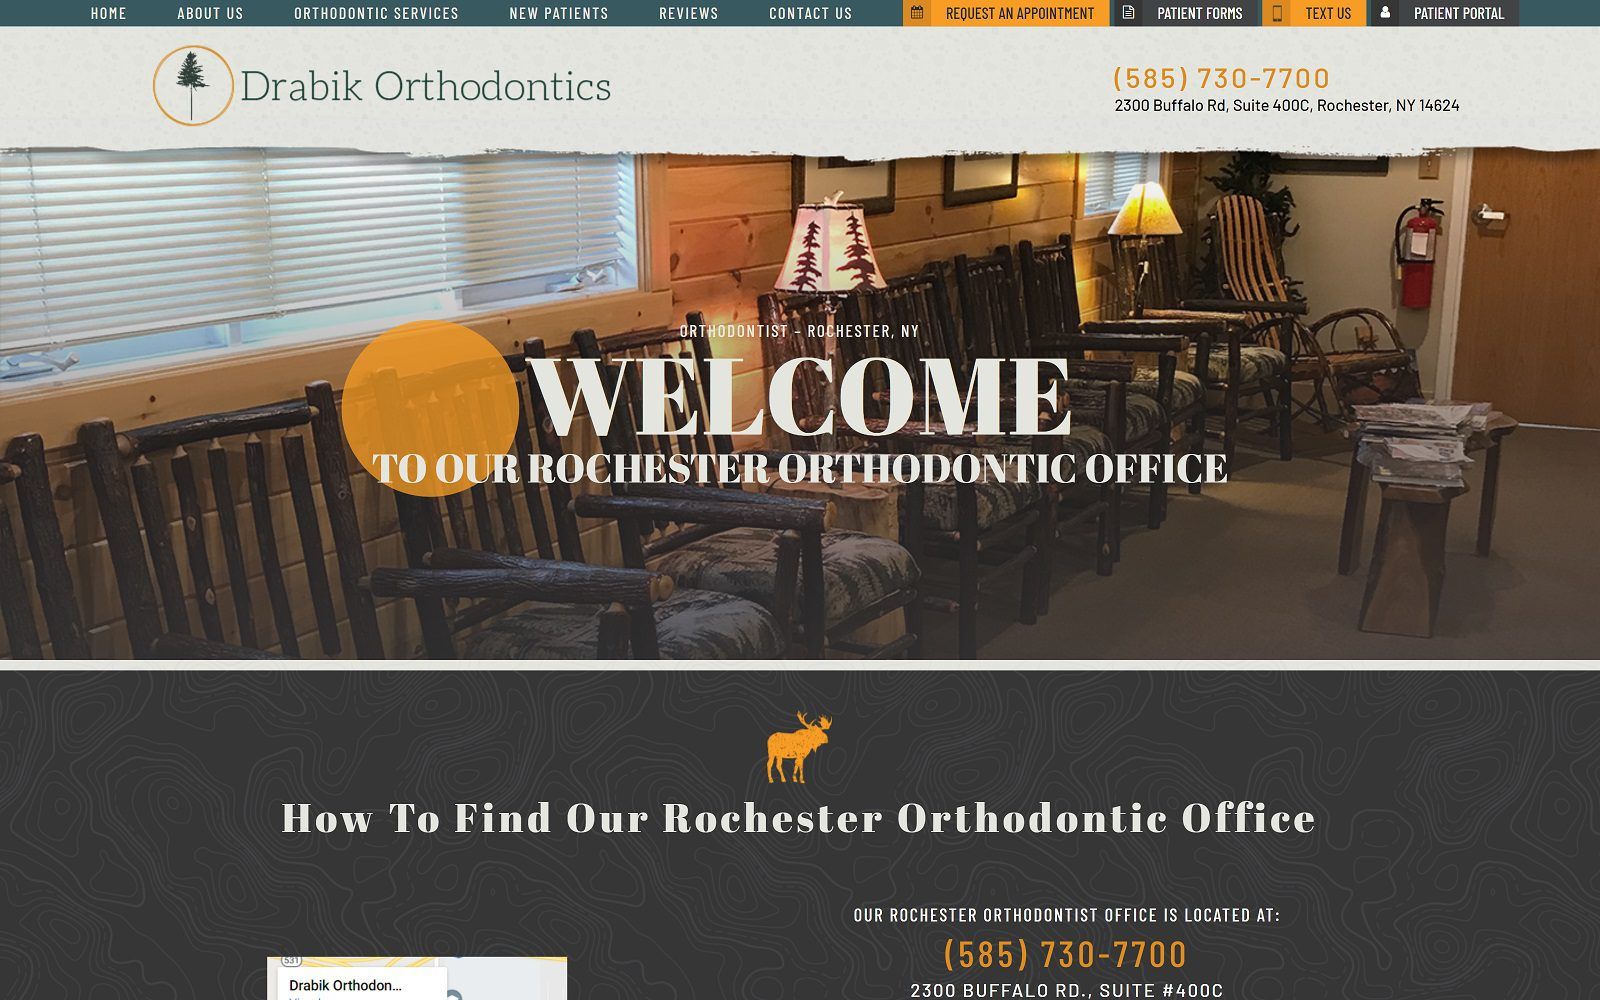 The screenshot of drabik orthodontics website